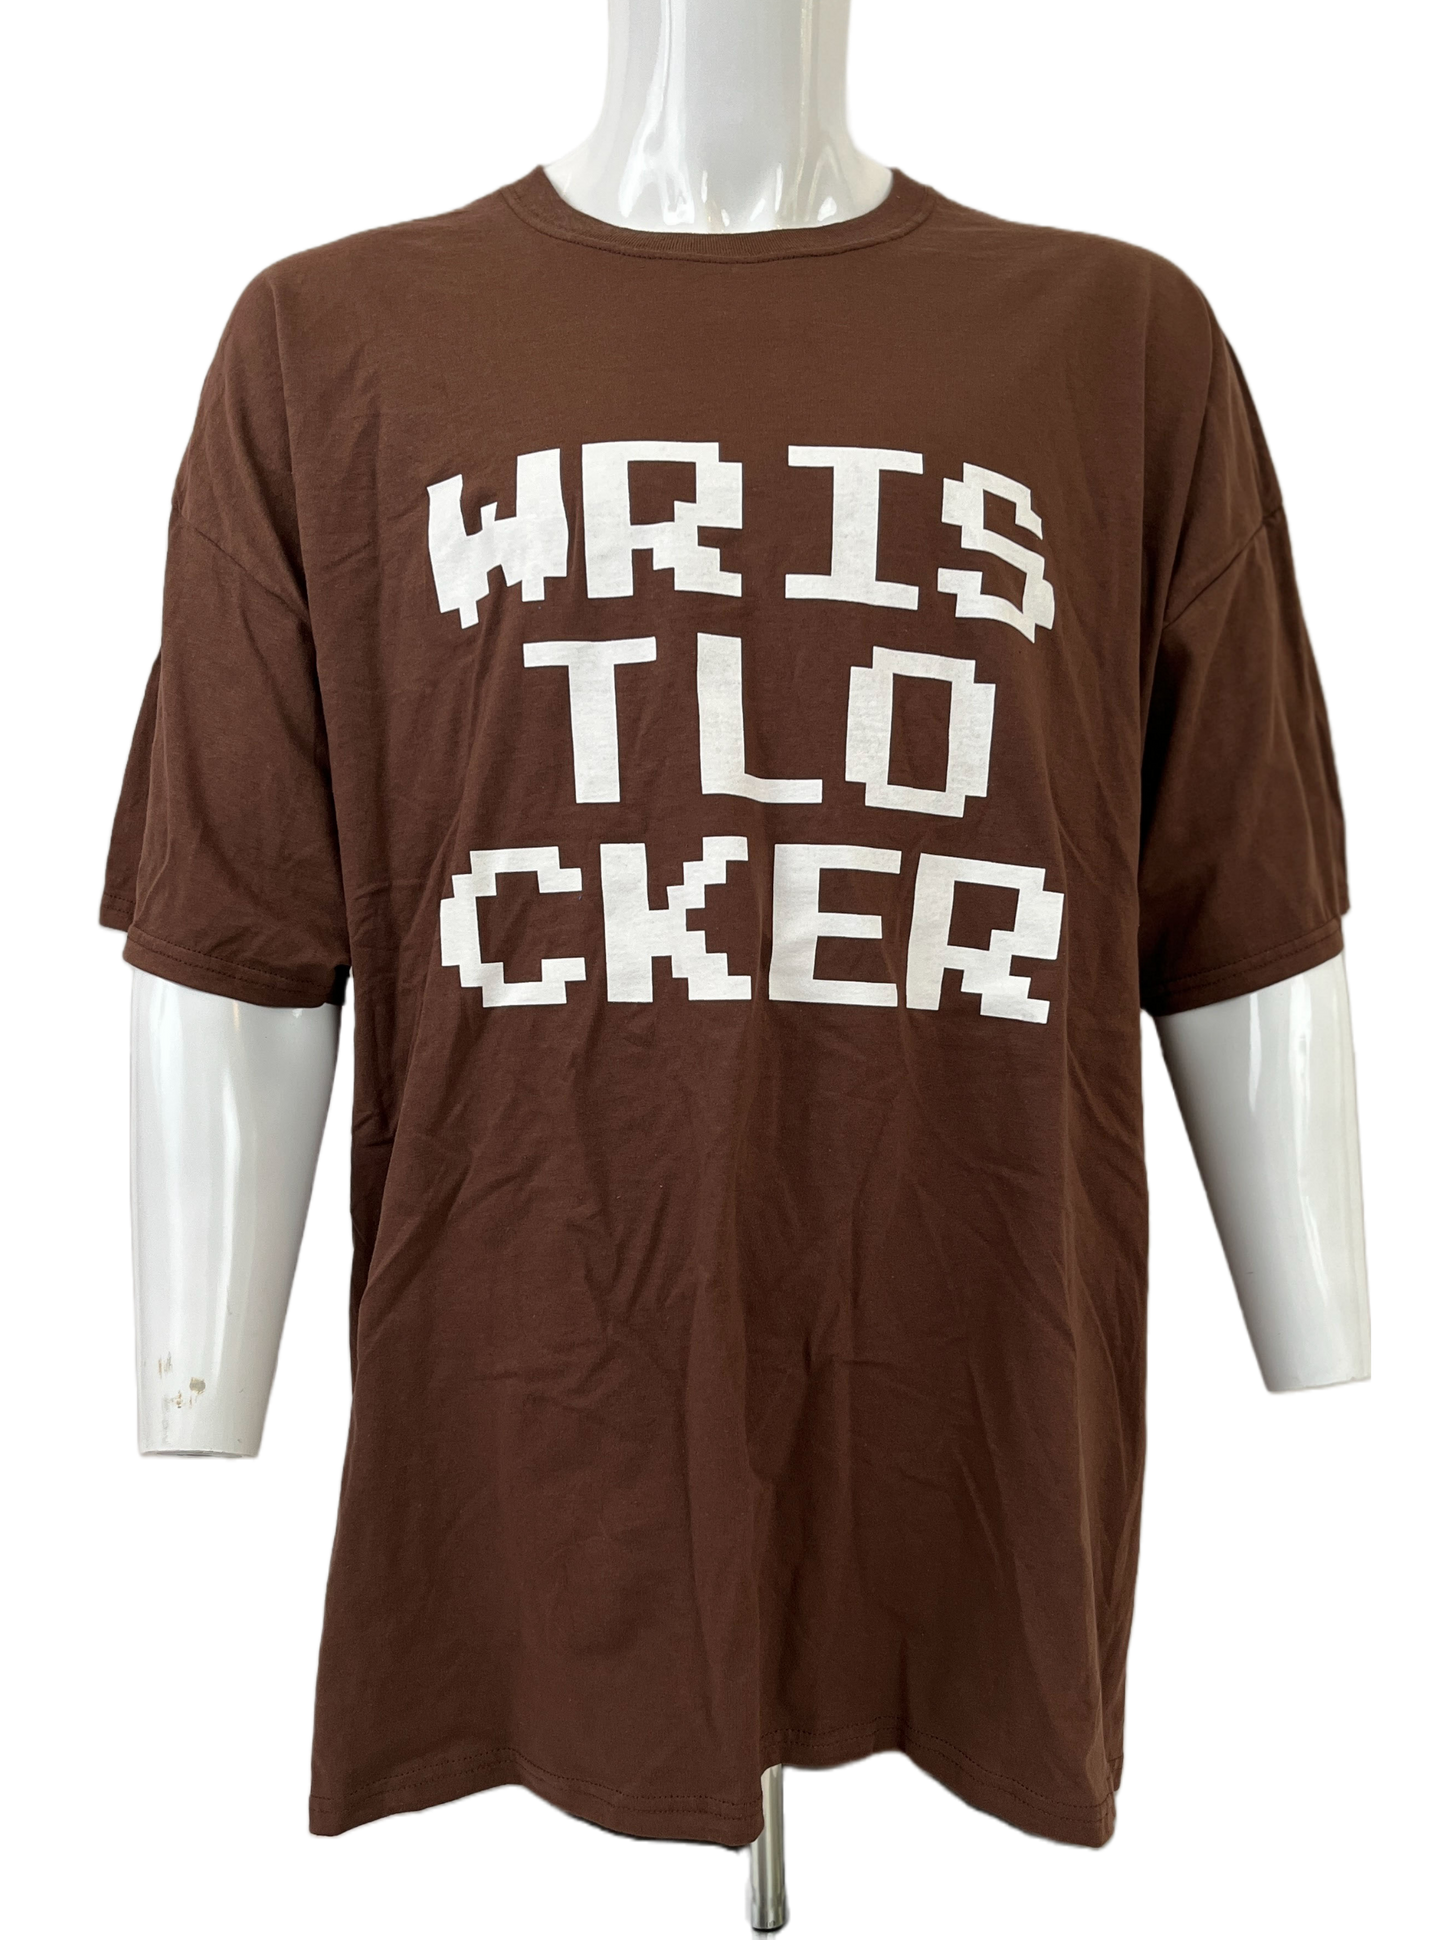 wristlocker 01 brown shirt white font front view